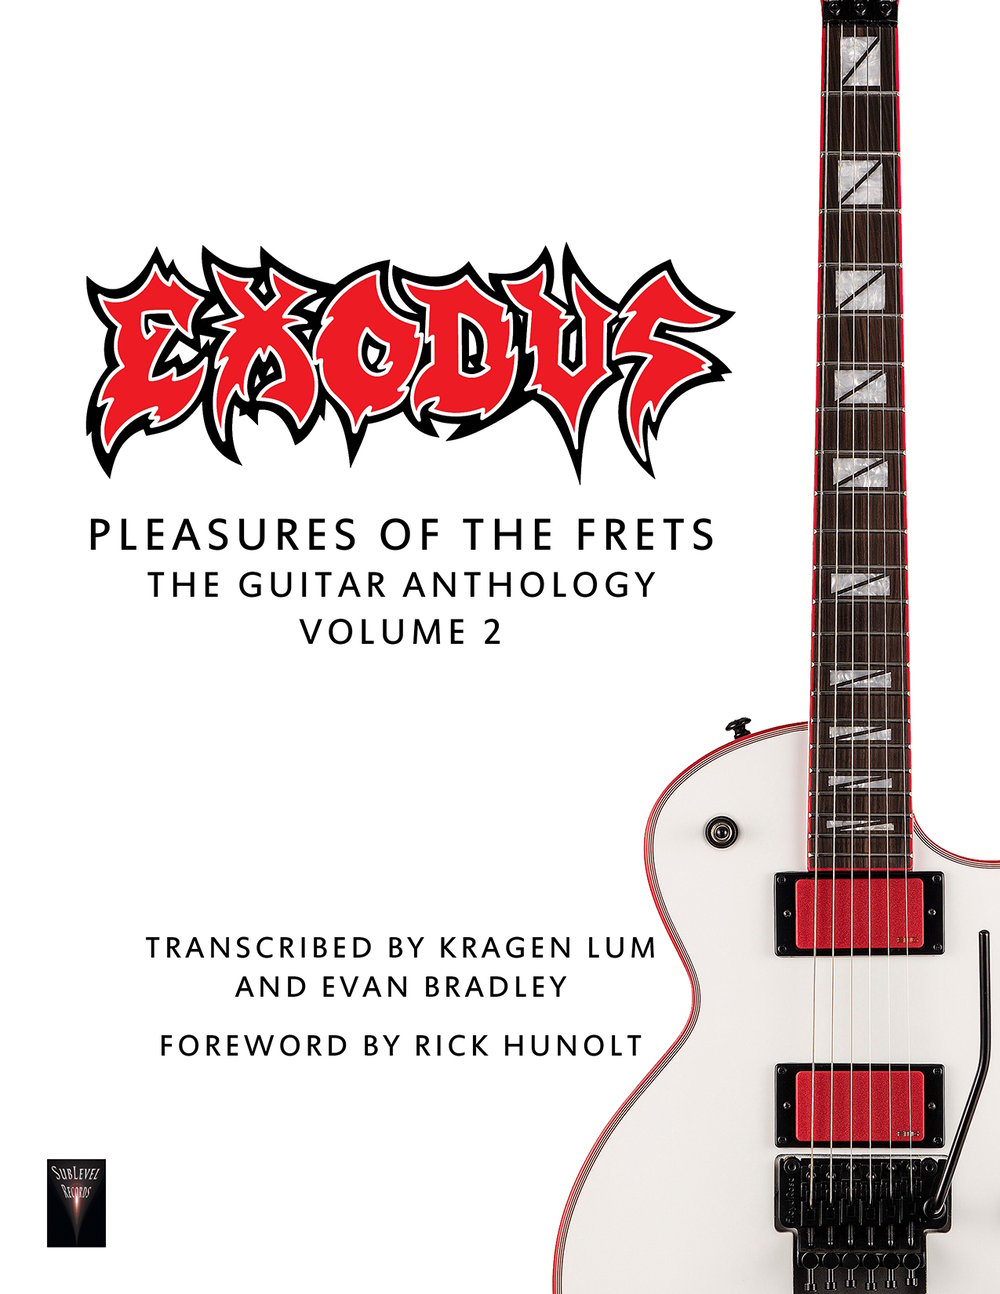 Exodus - Pleasures Of The Frets: Volume 2 (Deluxe Print Edition + Digital Copy + GP Files)